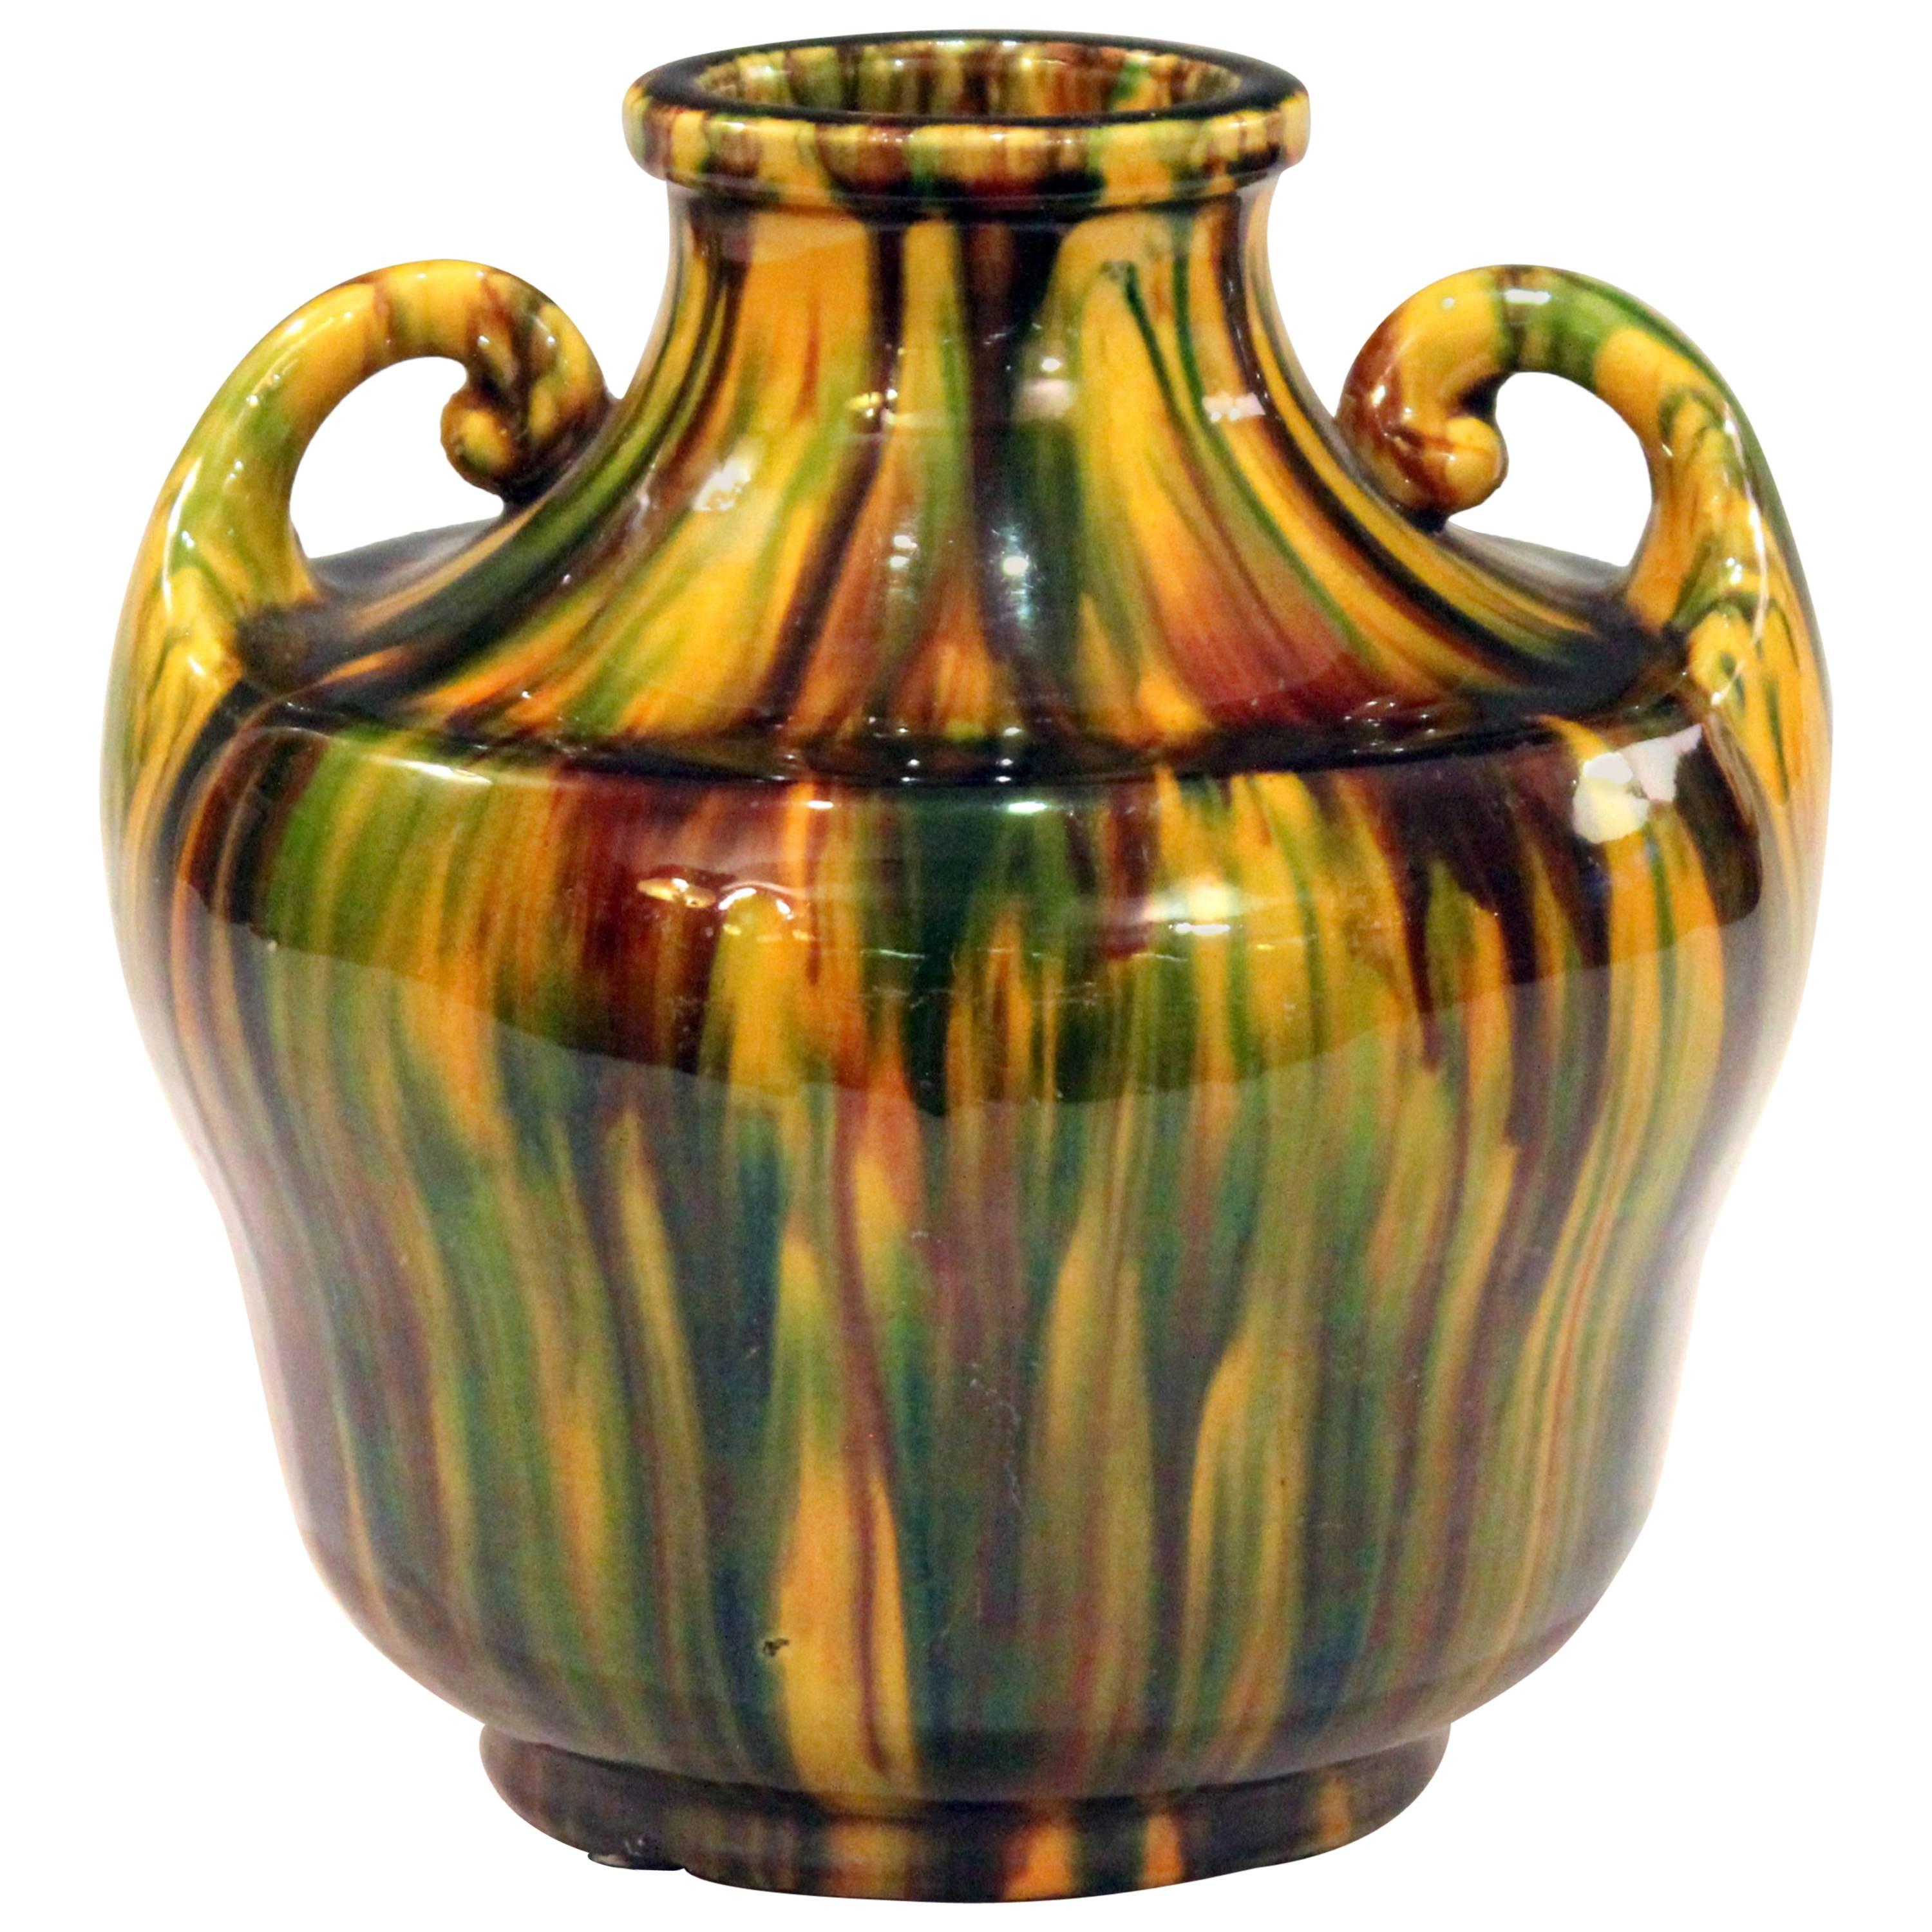 Awaji Pottery Art Deco Japanese Vintage Studio Vase in Yellow Flambe Glaze For Sale